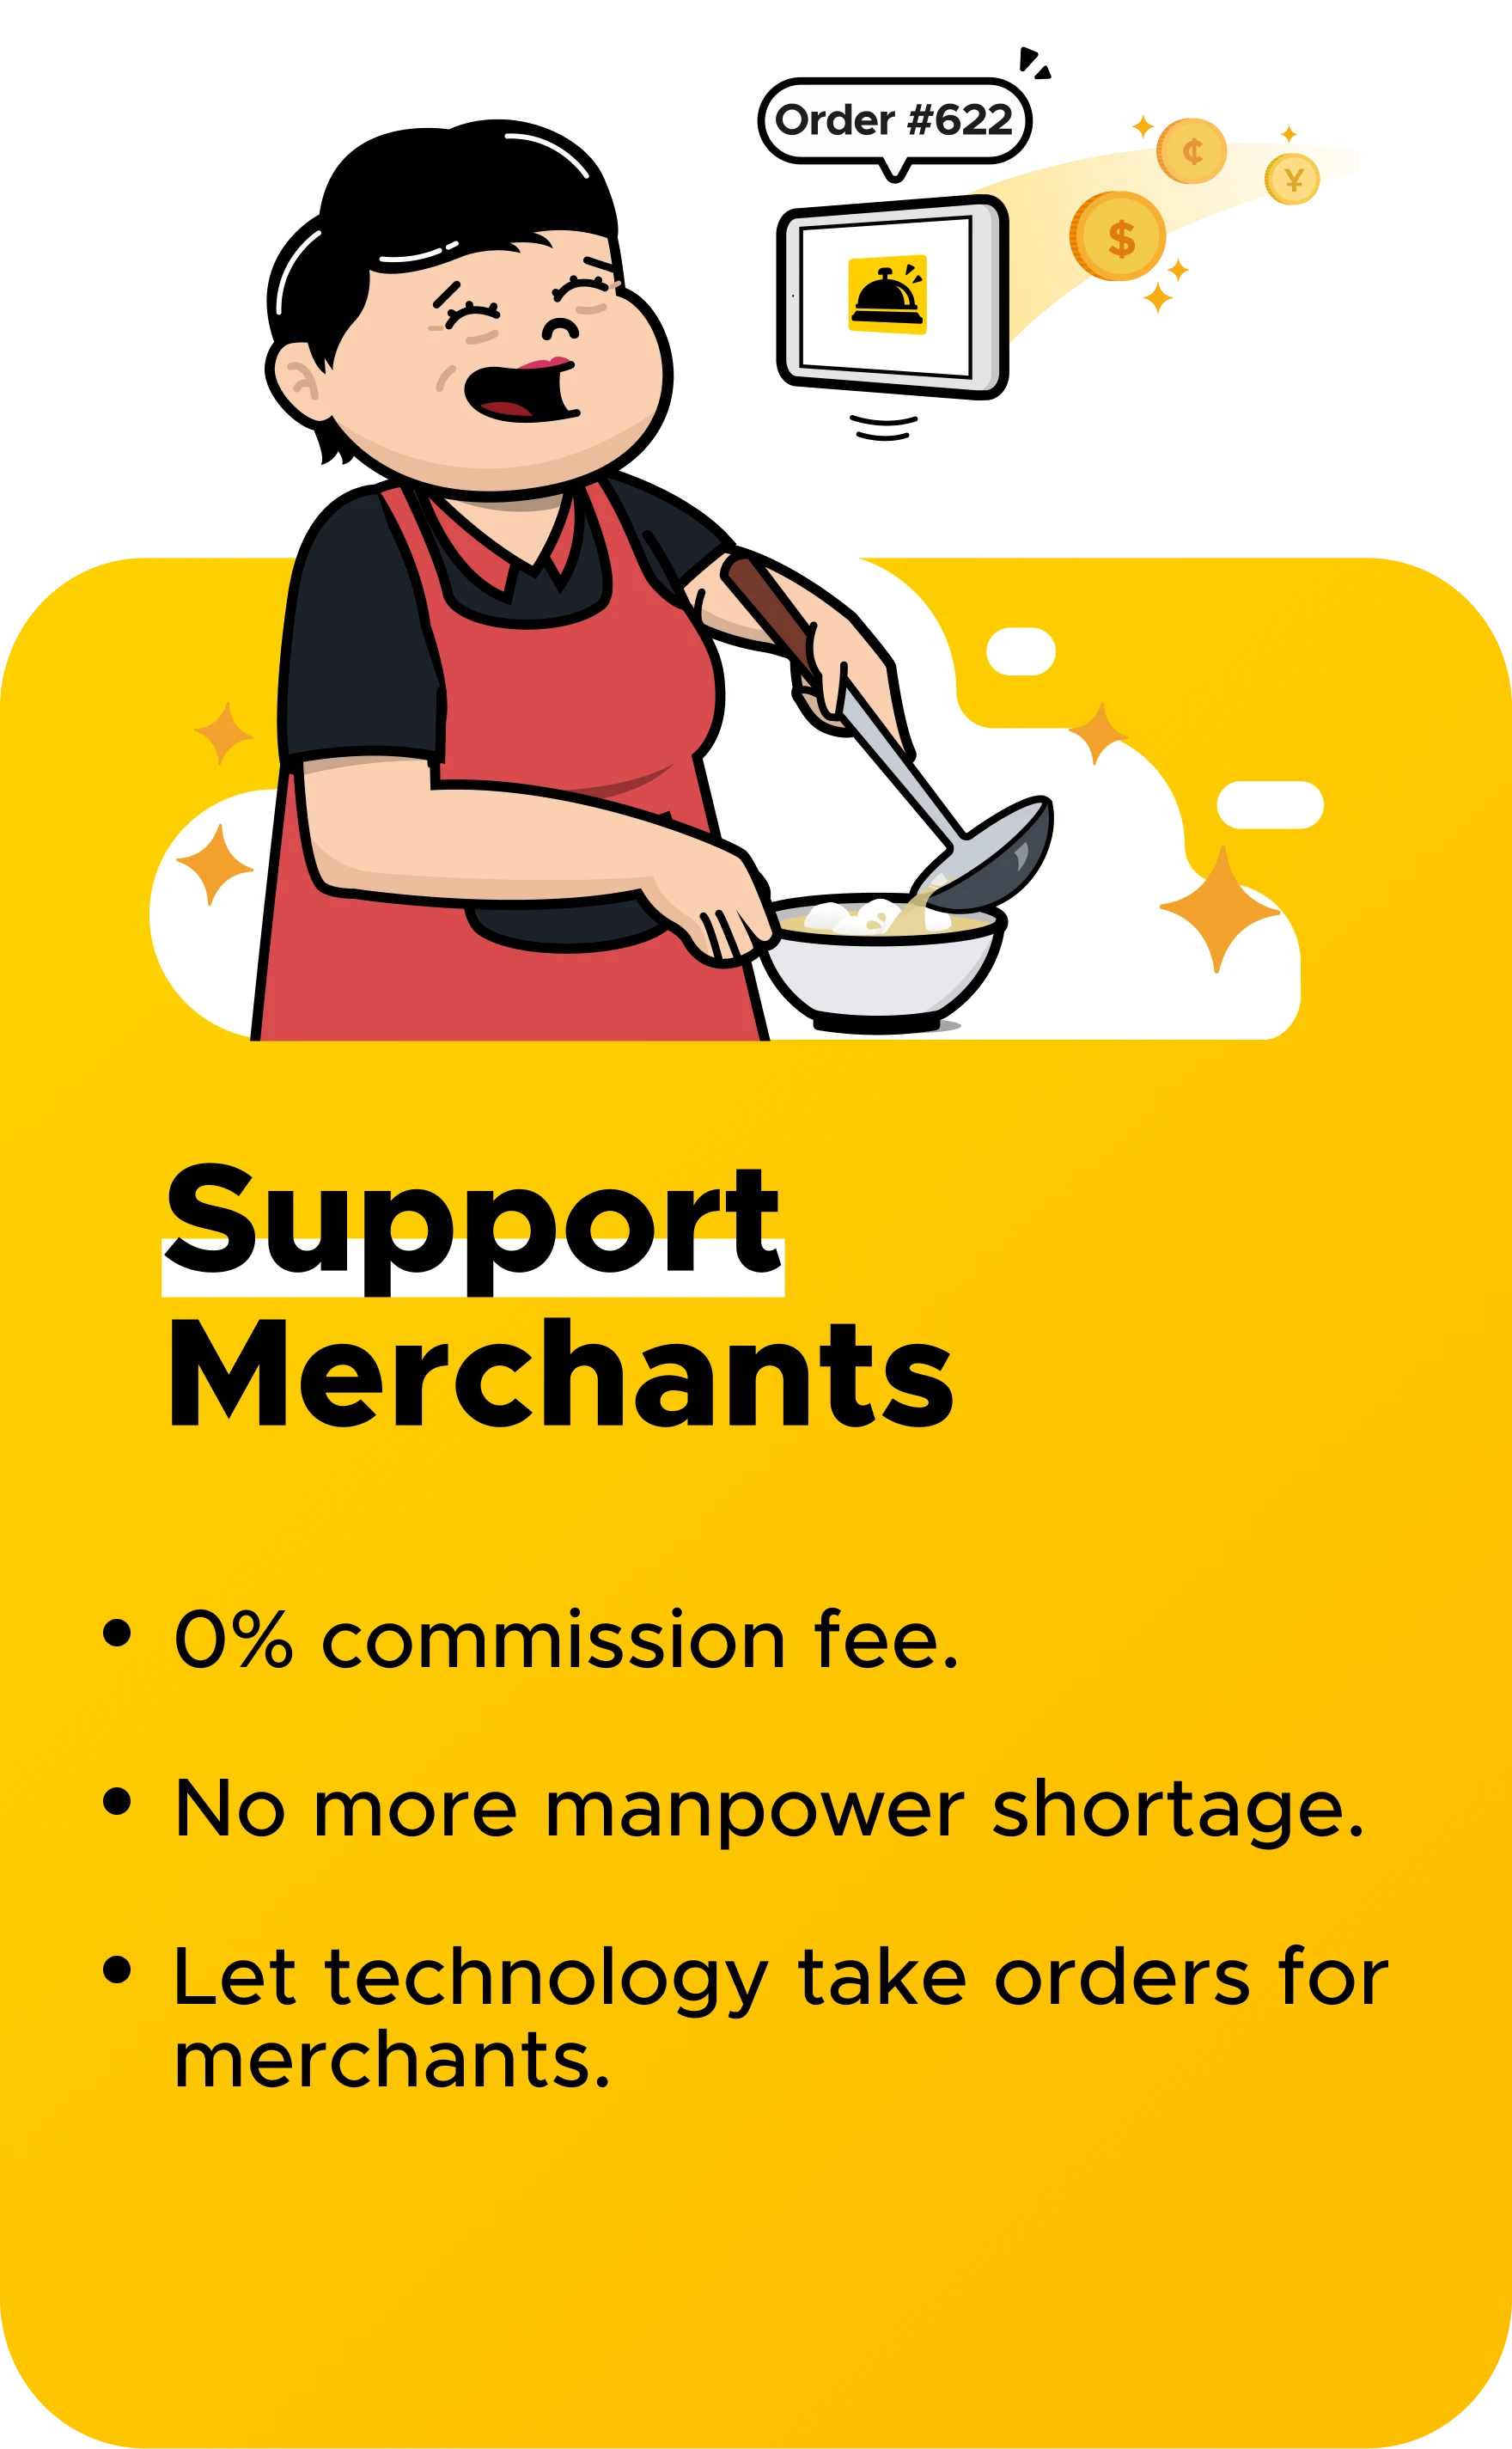 Support Merchants